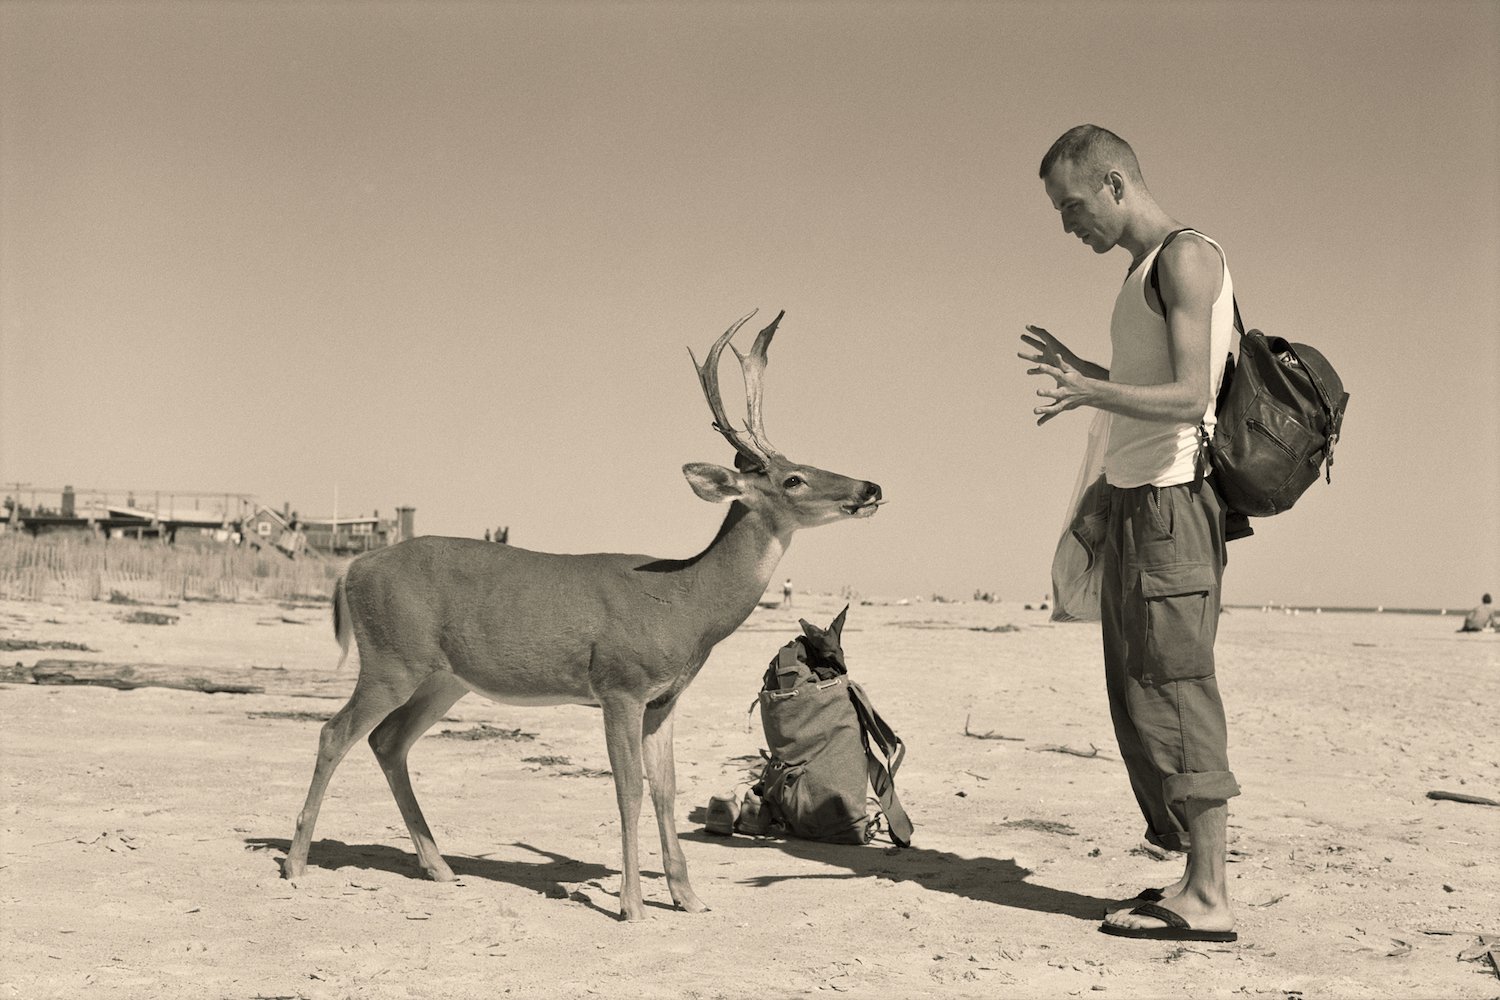 Image: Wolfgang Tillmans, Deer Hirsch. Courtesy of Galerie Buchholz, Berlin/Cologne